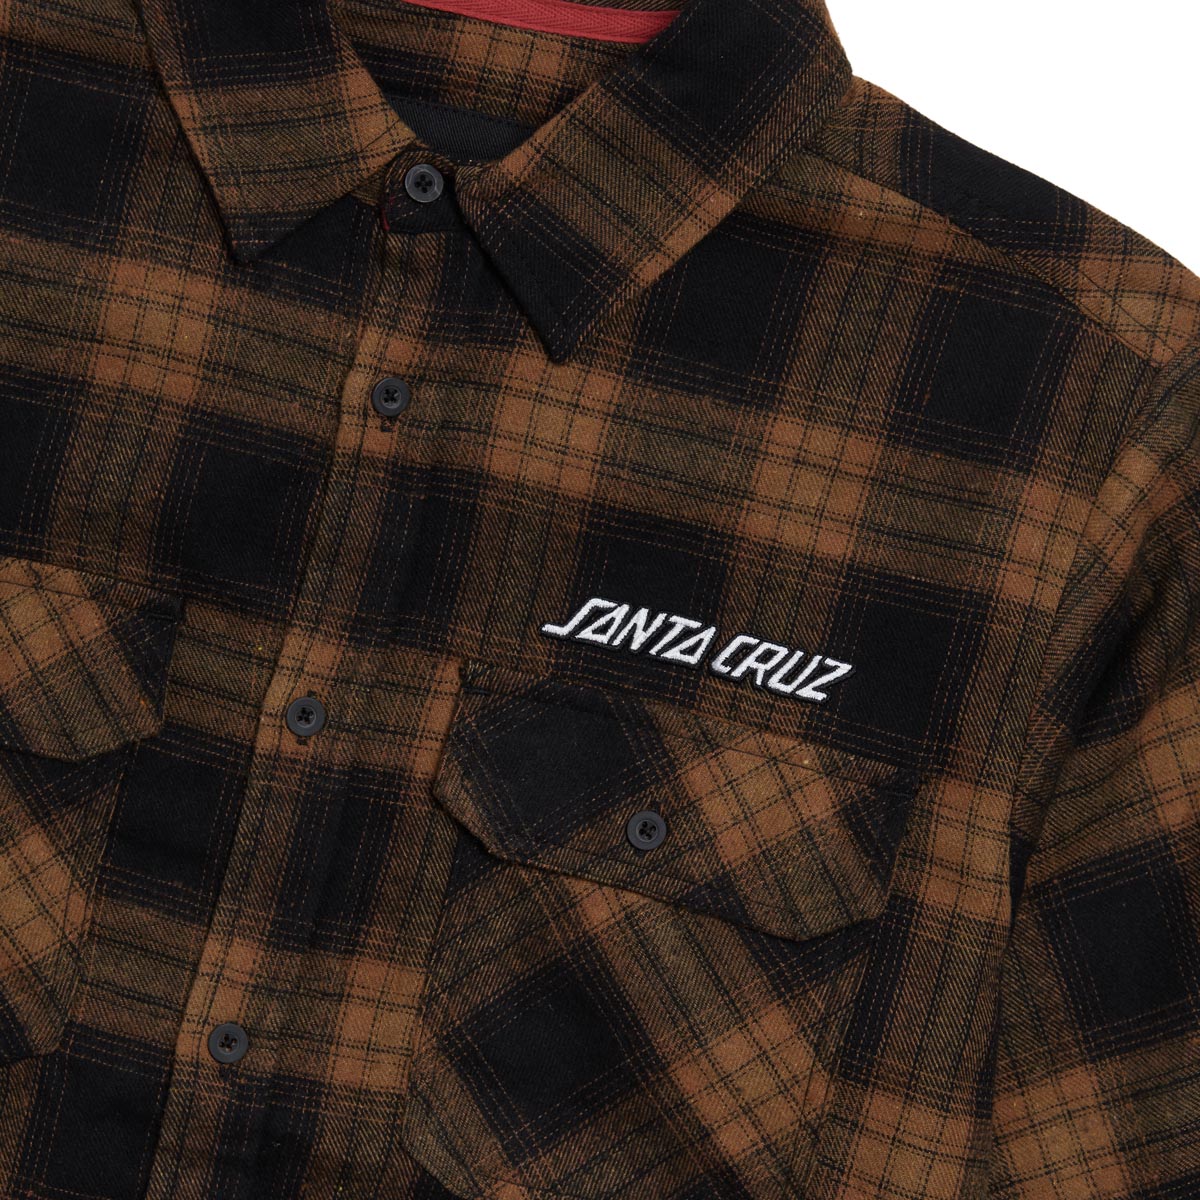 Santa Cruz Stone Flannel Long Sleeve Shirt - Black/Brown image 3